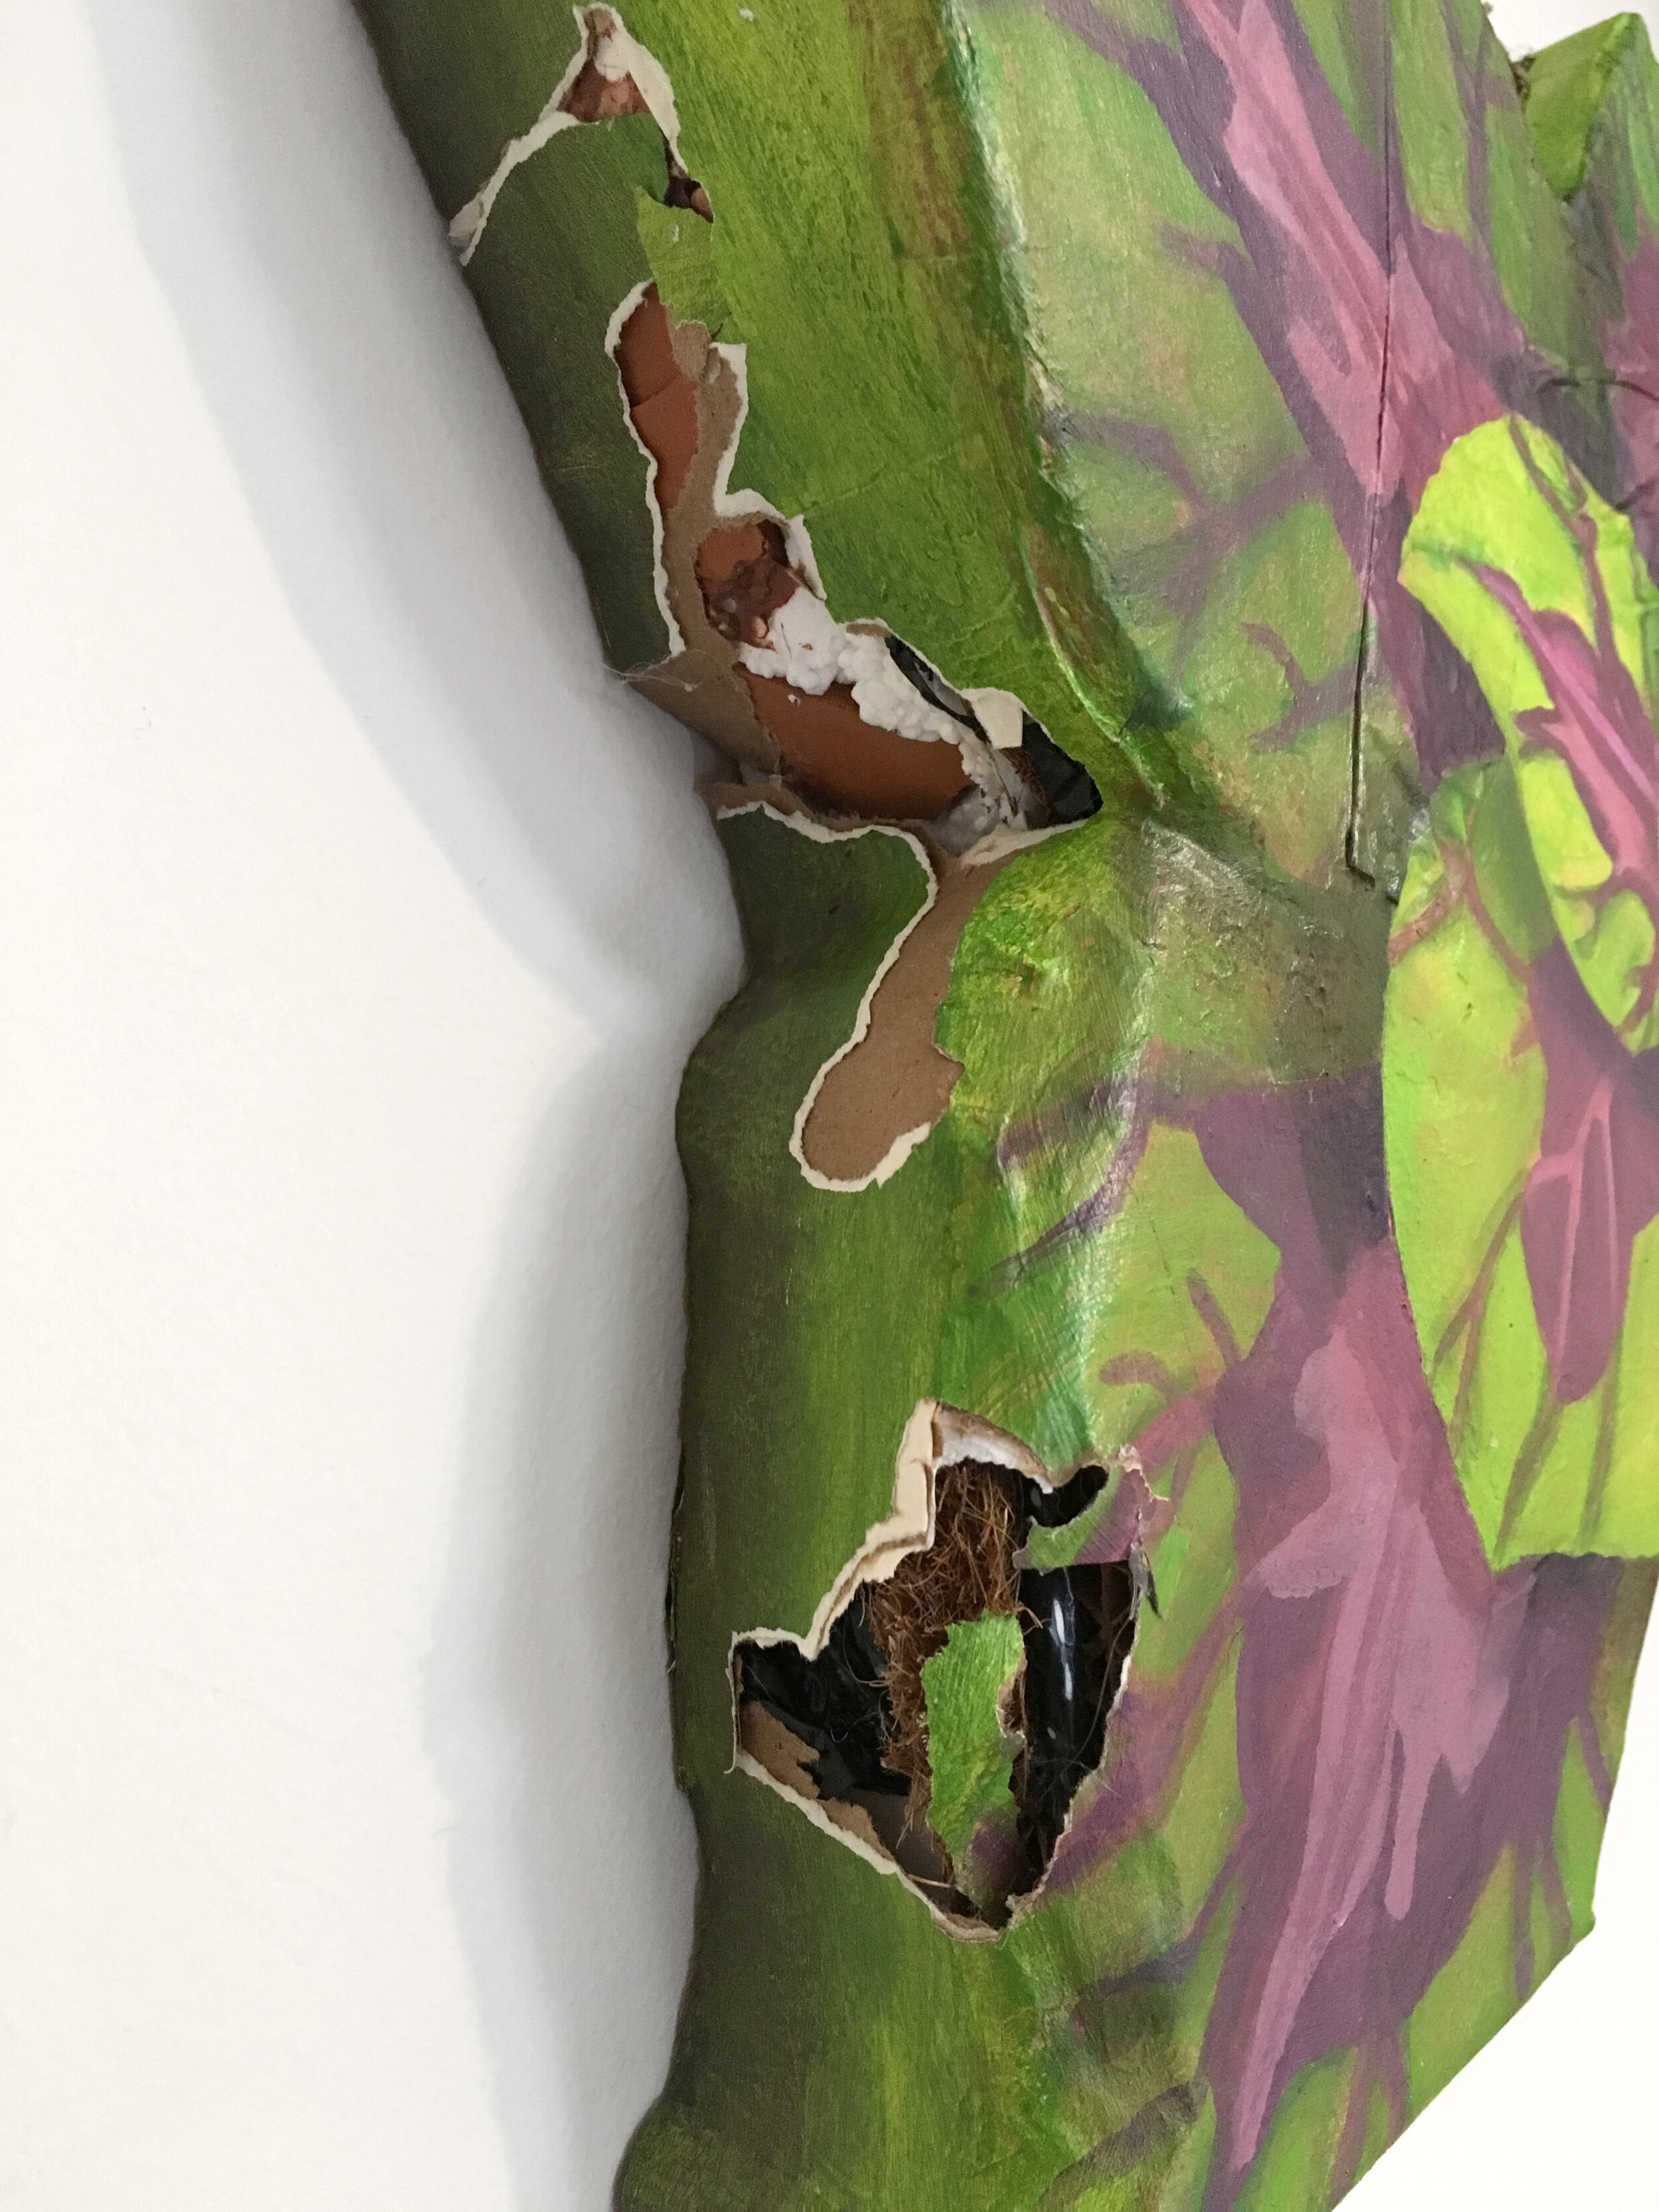  “Coleus”,   15h x 15w x 2.5w in, Acrylic on paper, plastic, cardboard, foam, fake flowers, coconut husk, and terracotta shards, 2019 